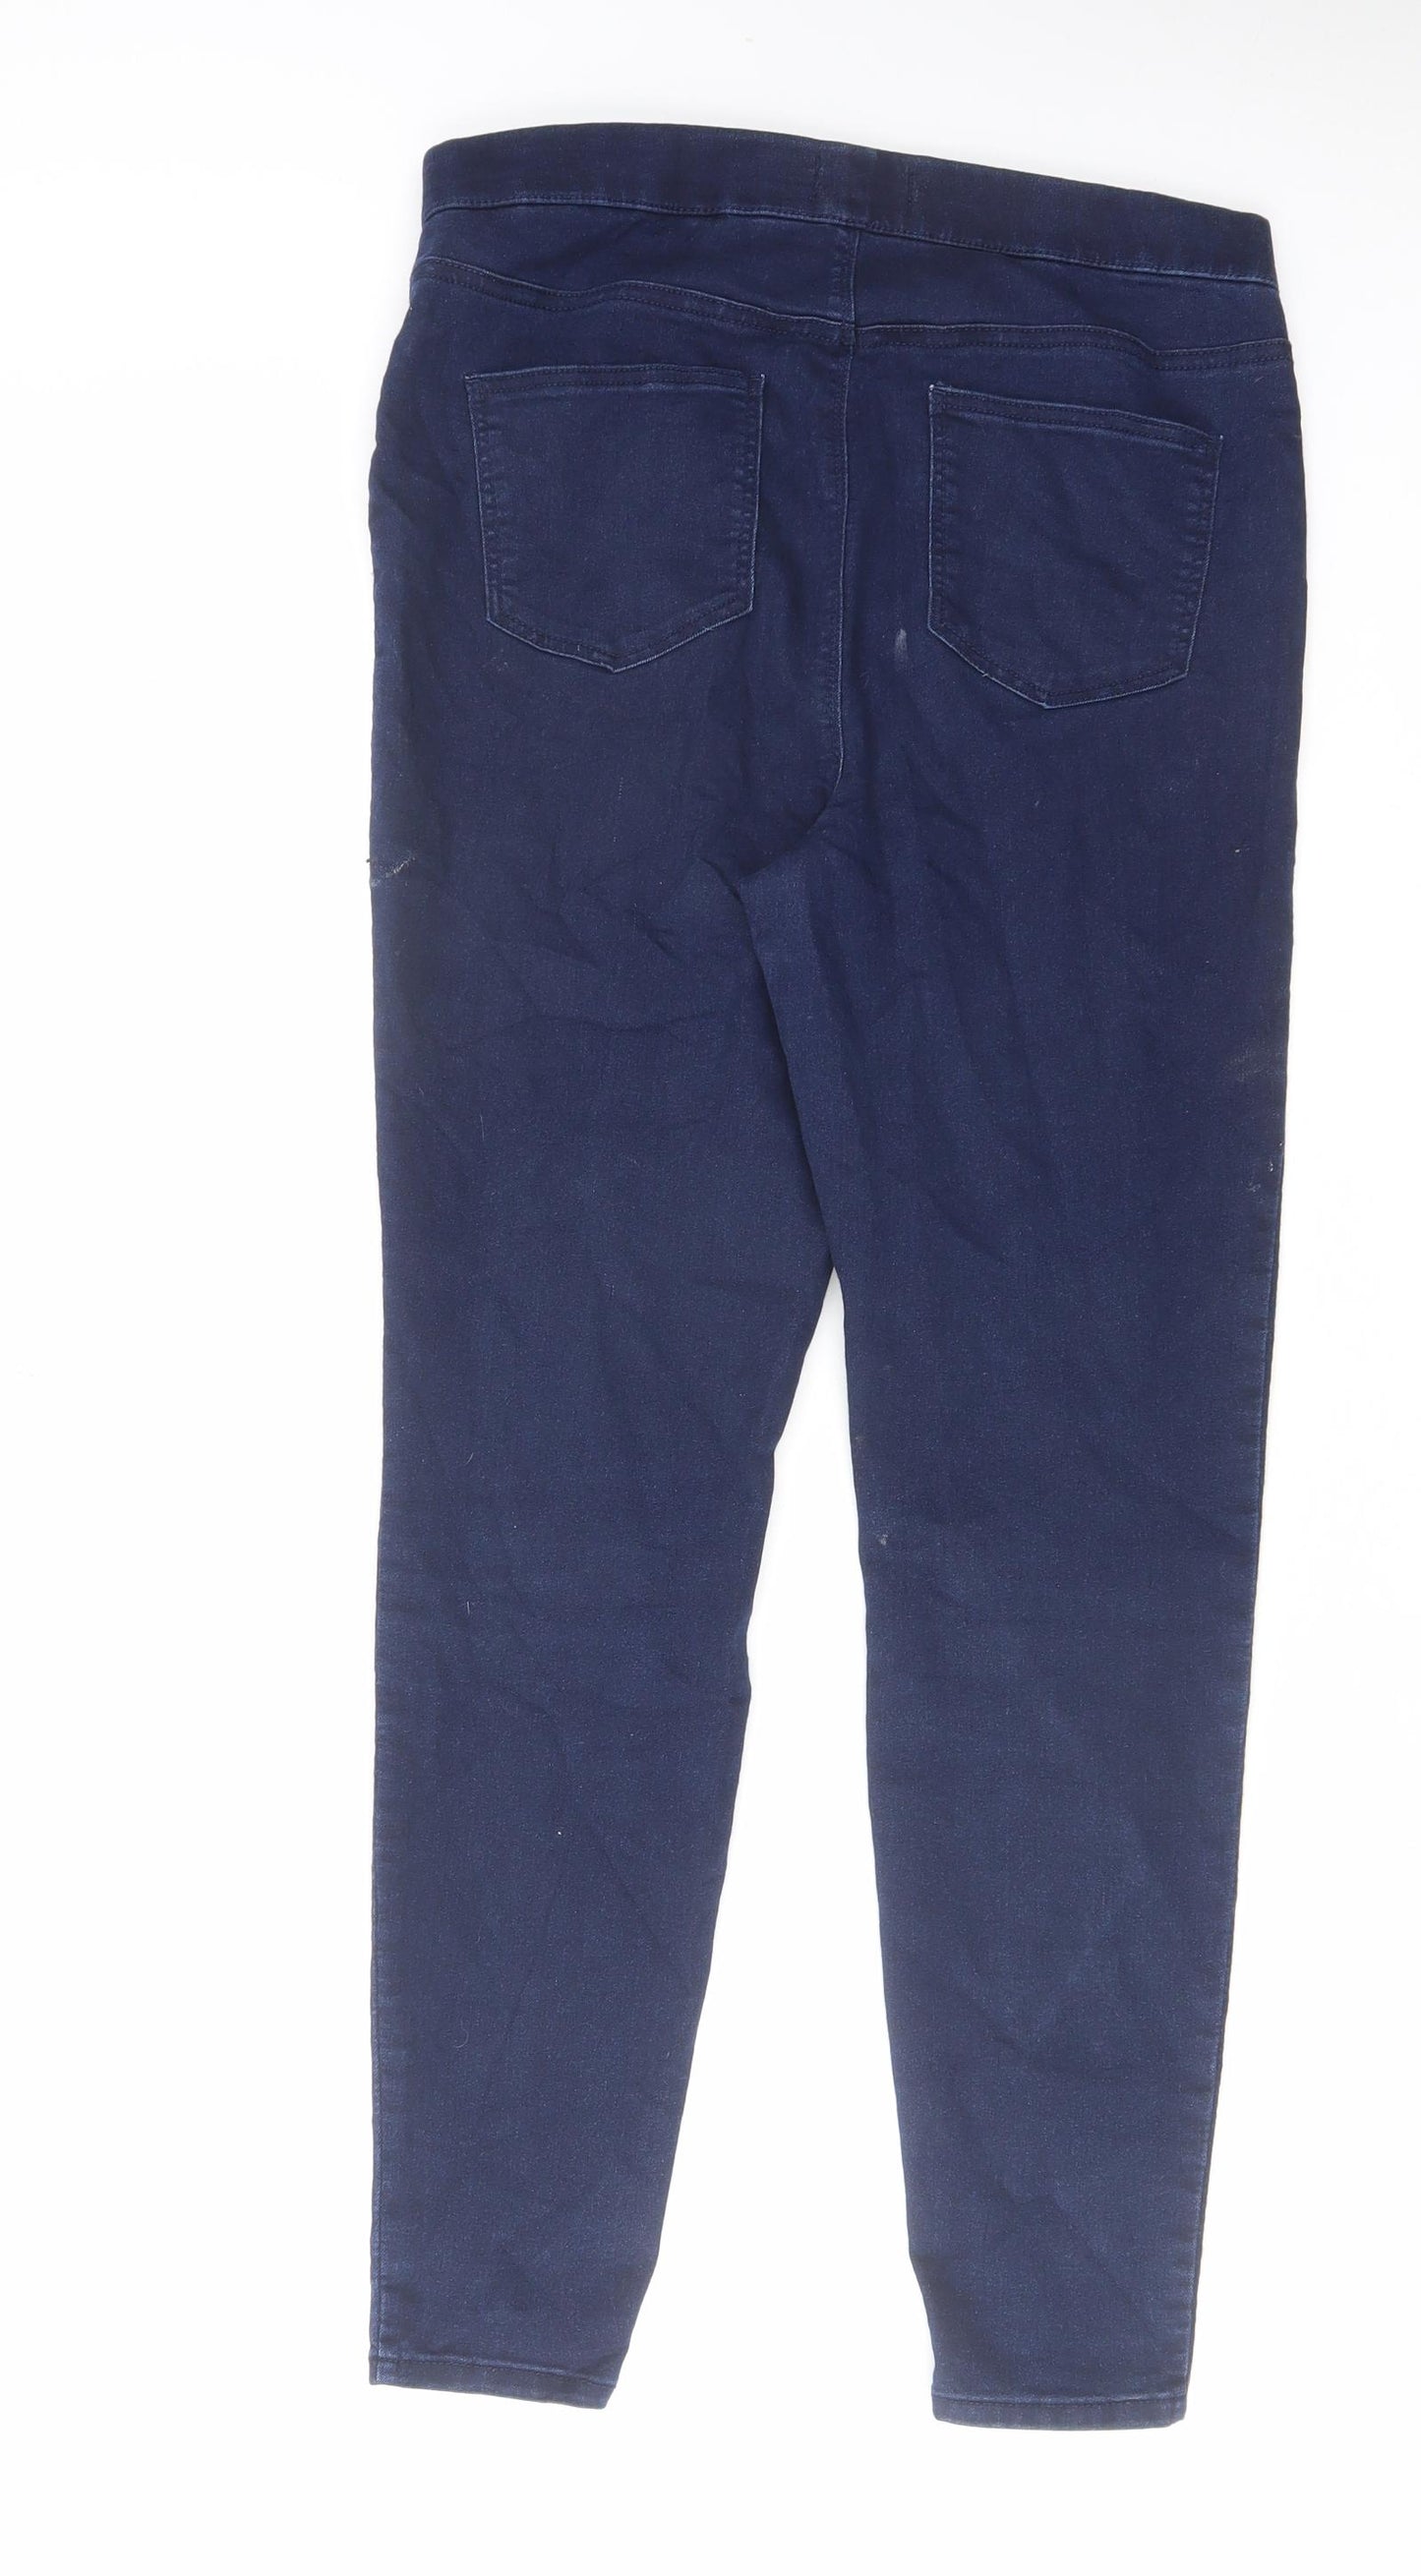 Papaya Womens Blue Cotton Jegging Jeans Size 12 L27 in Regular